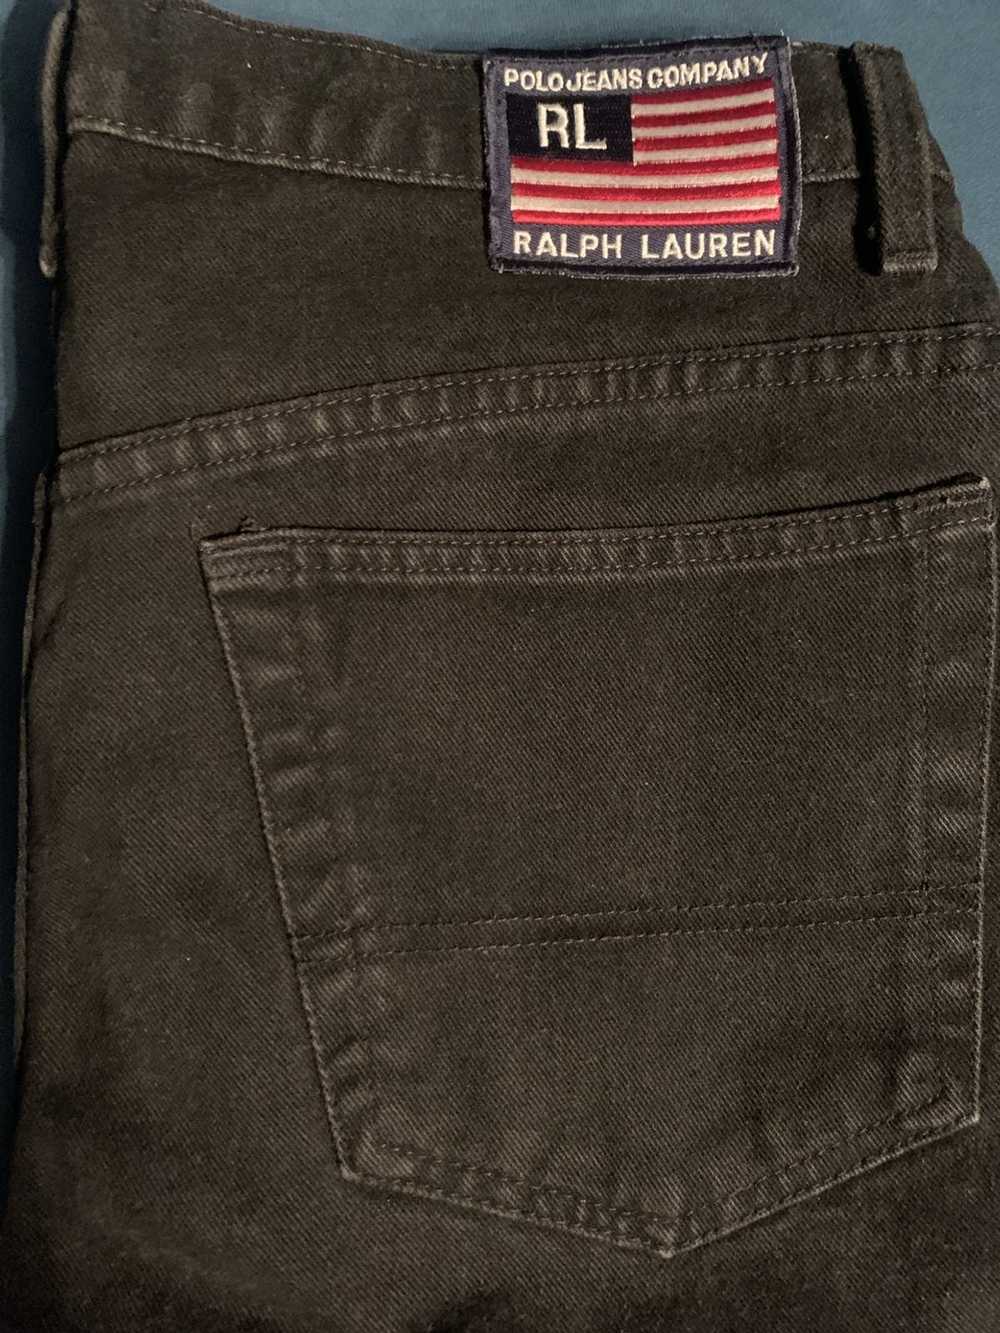 Polo Ralph Lauren Polo jeans company x Ralph Laur… - image 1